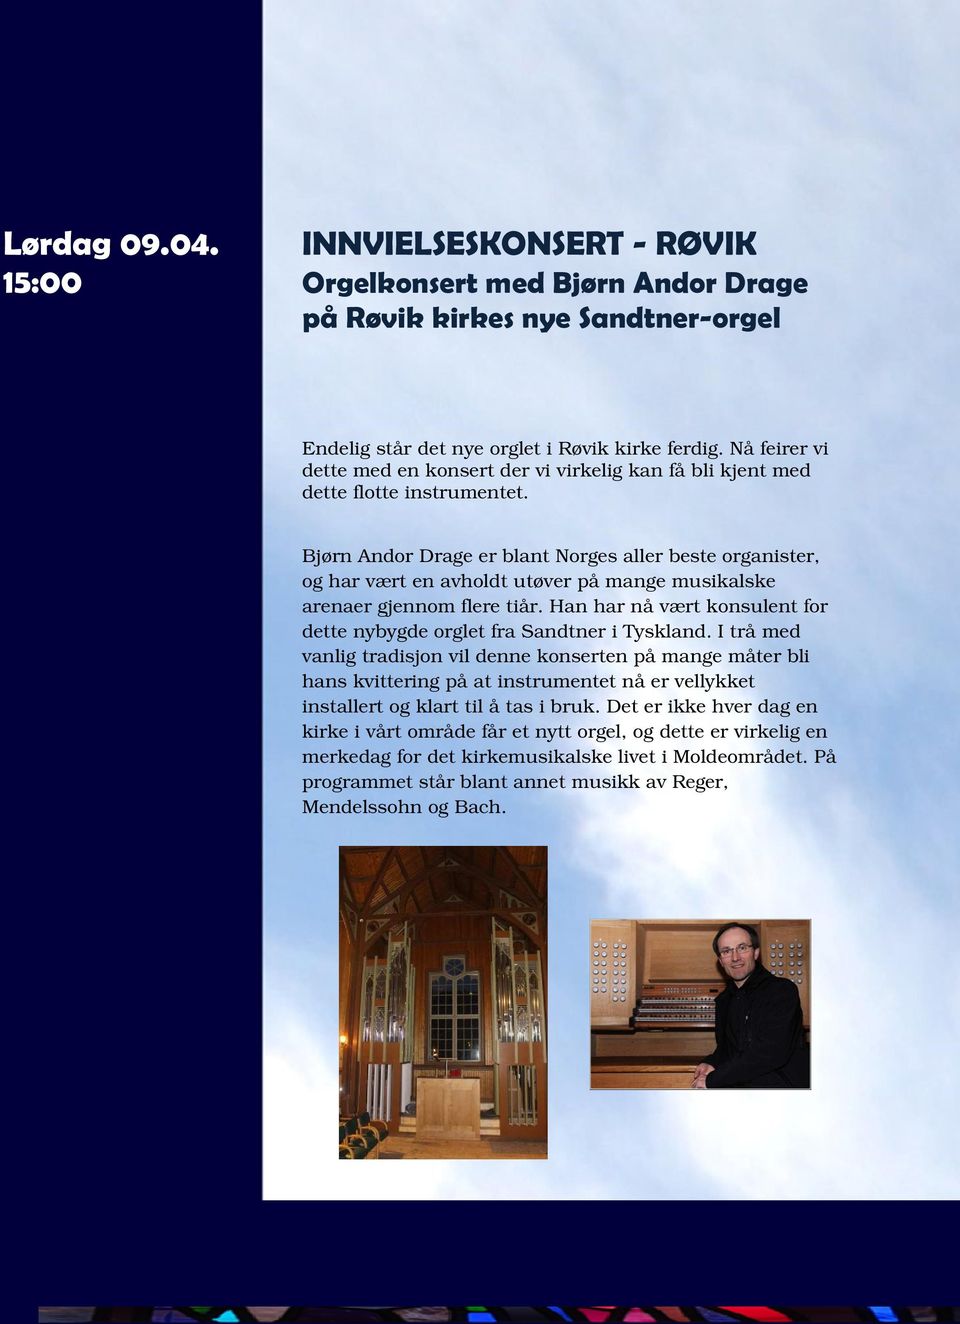 Bjørn Andor Drage er blant Norges aller beste organister, og har vært en avholdt utøver på mange musikalske arenaer gjennom flere tiår.